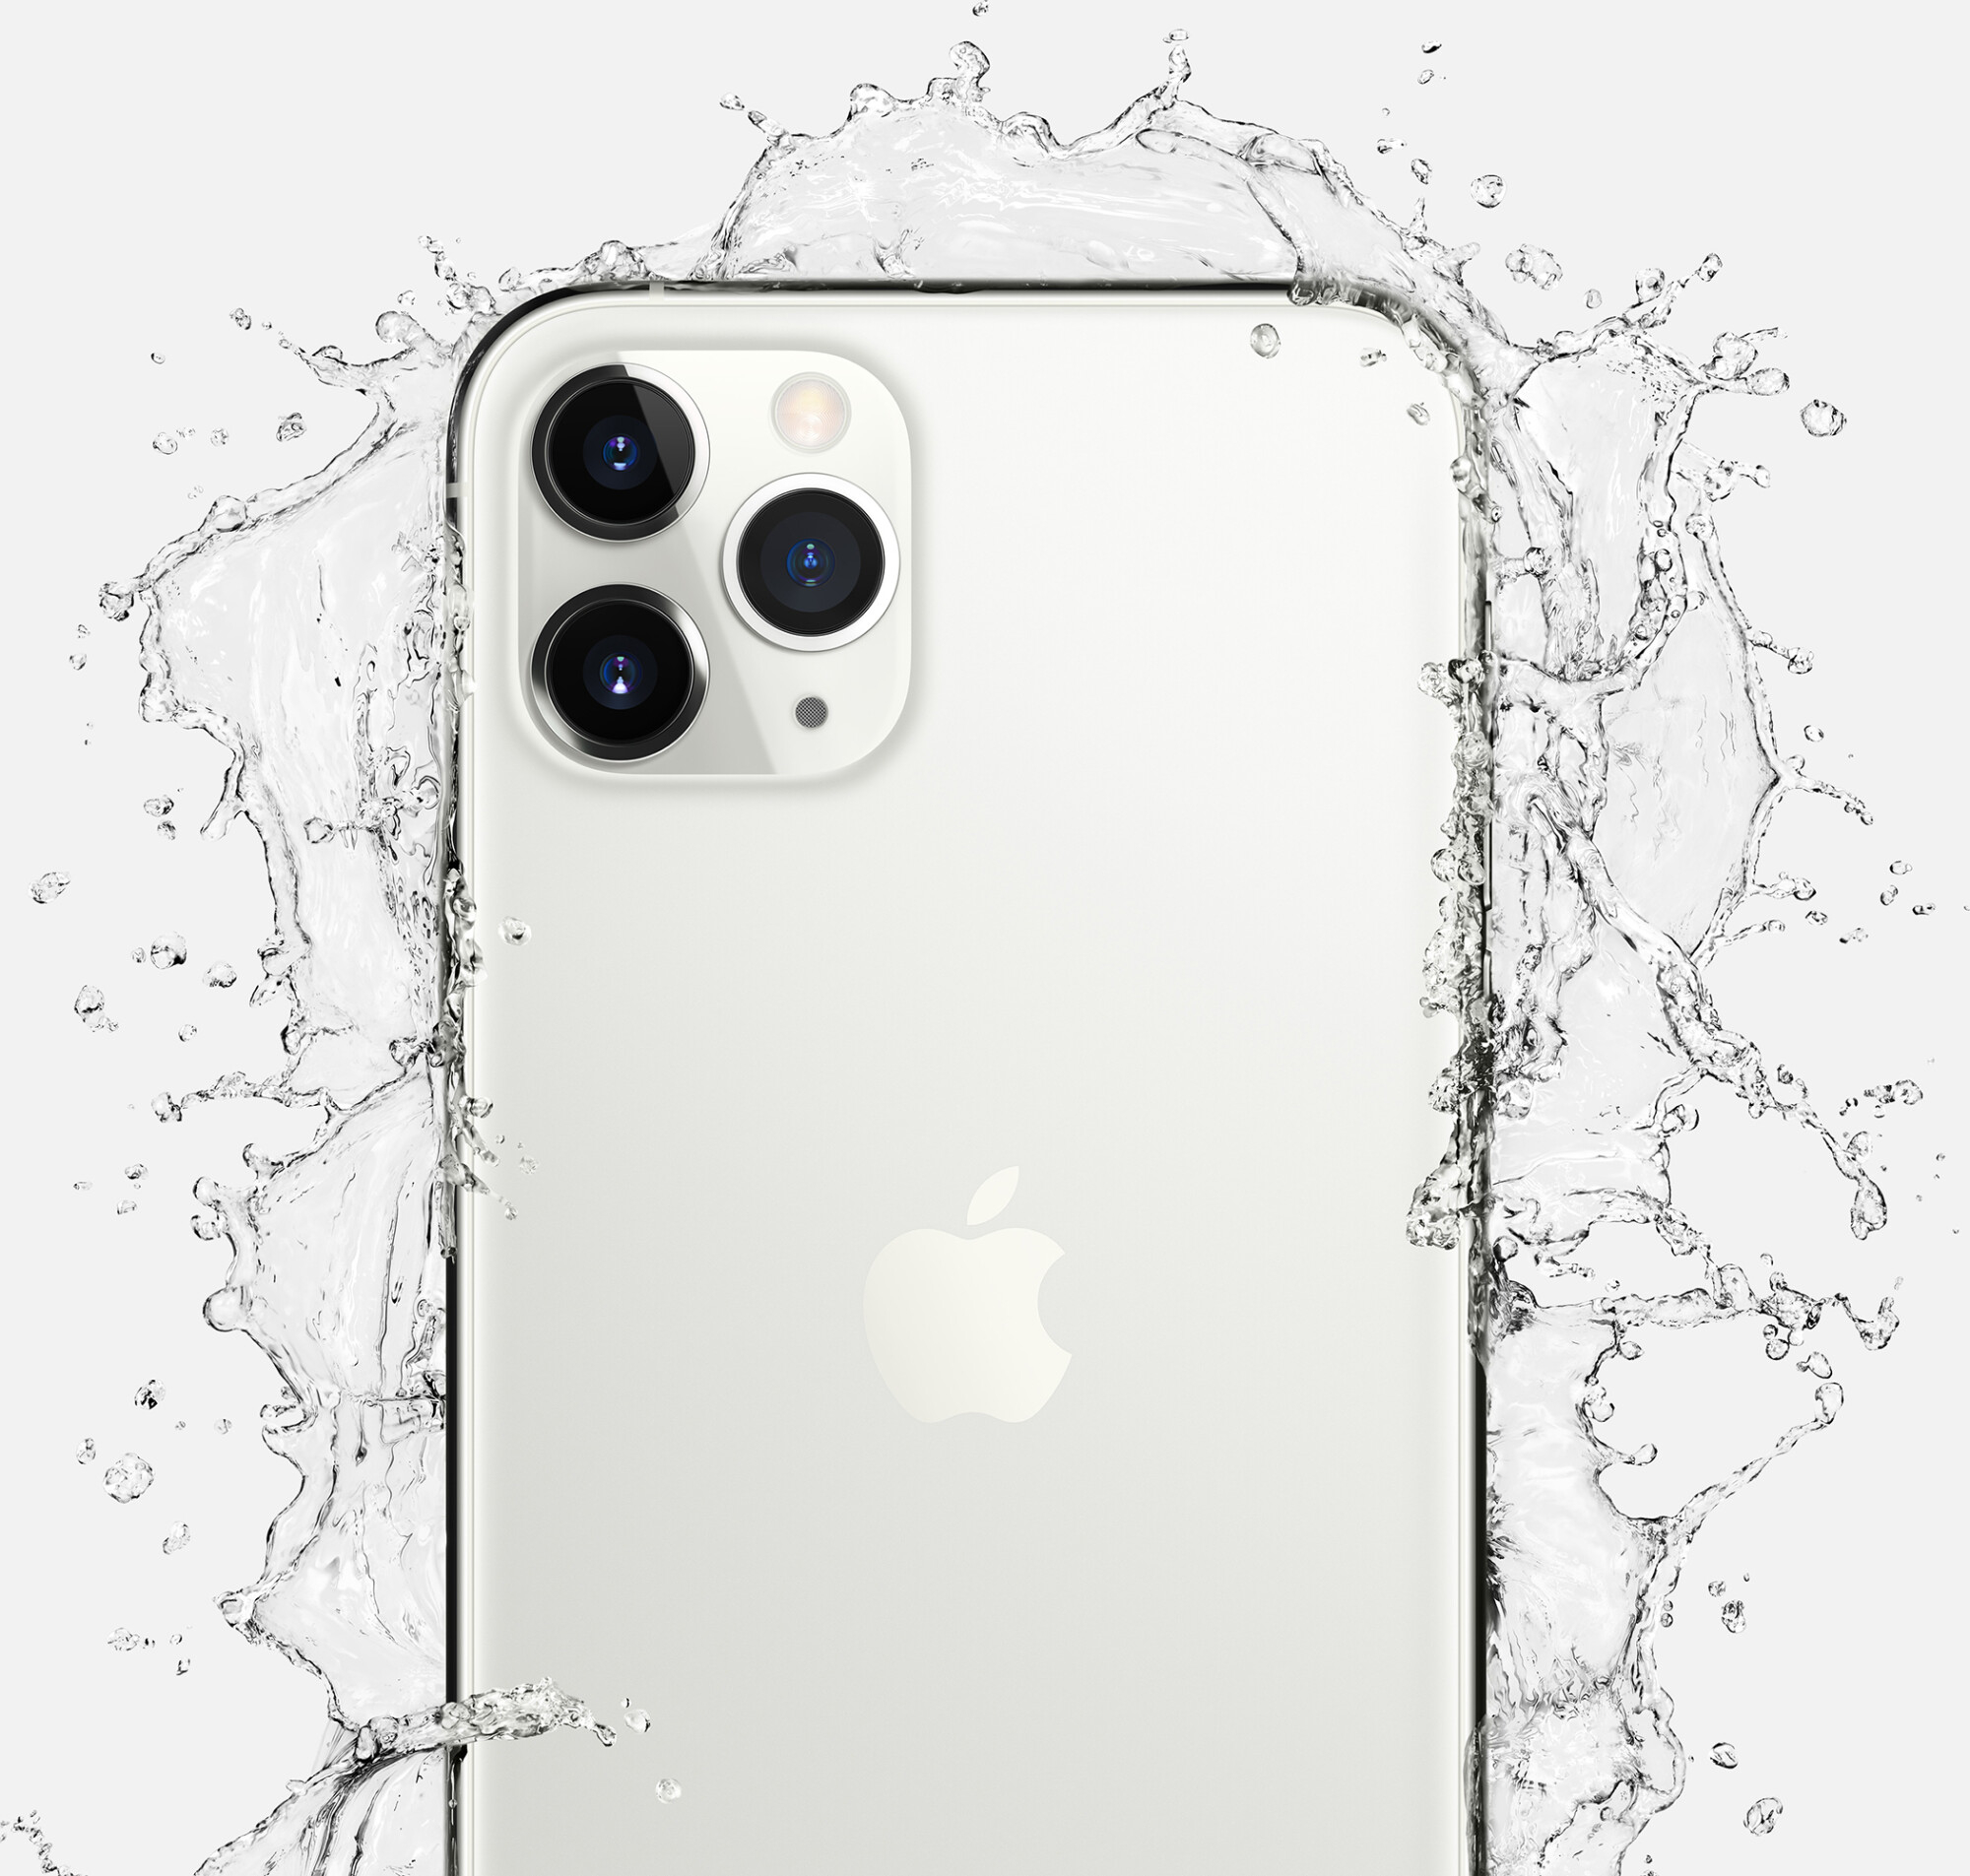  Apple iPhone 11 Pro 64GB Silver (MWC32)